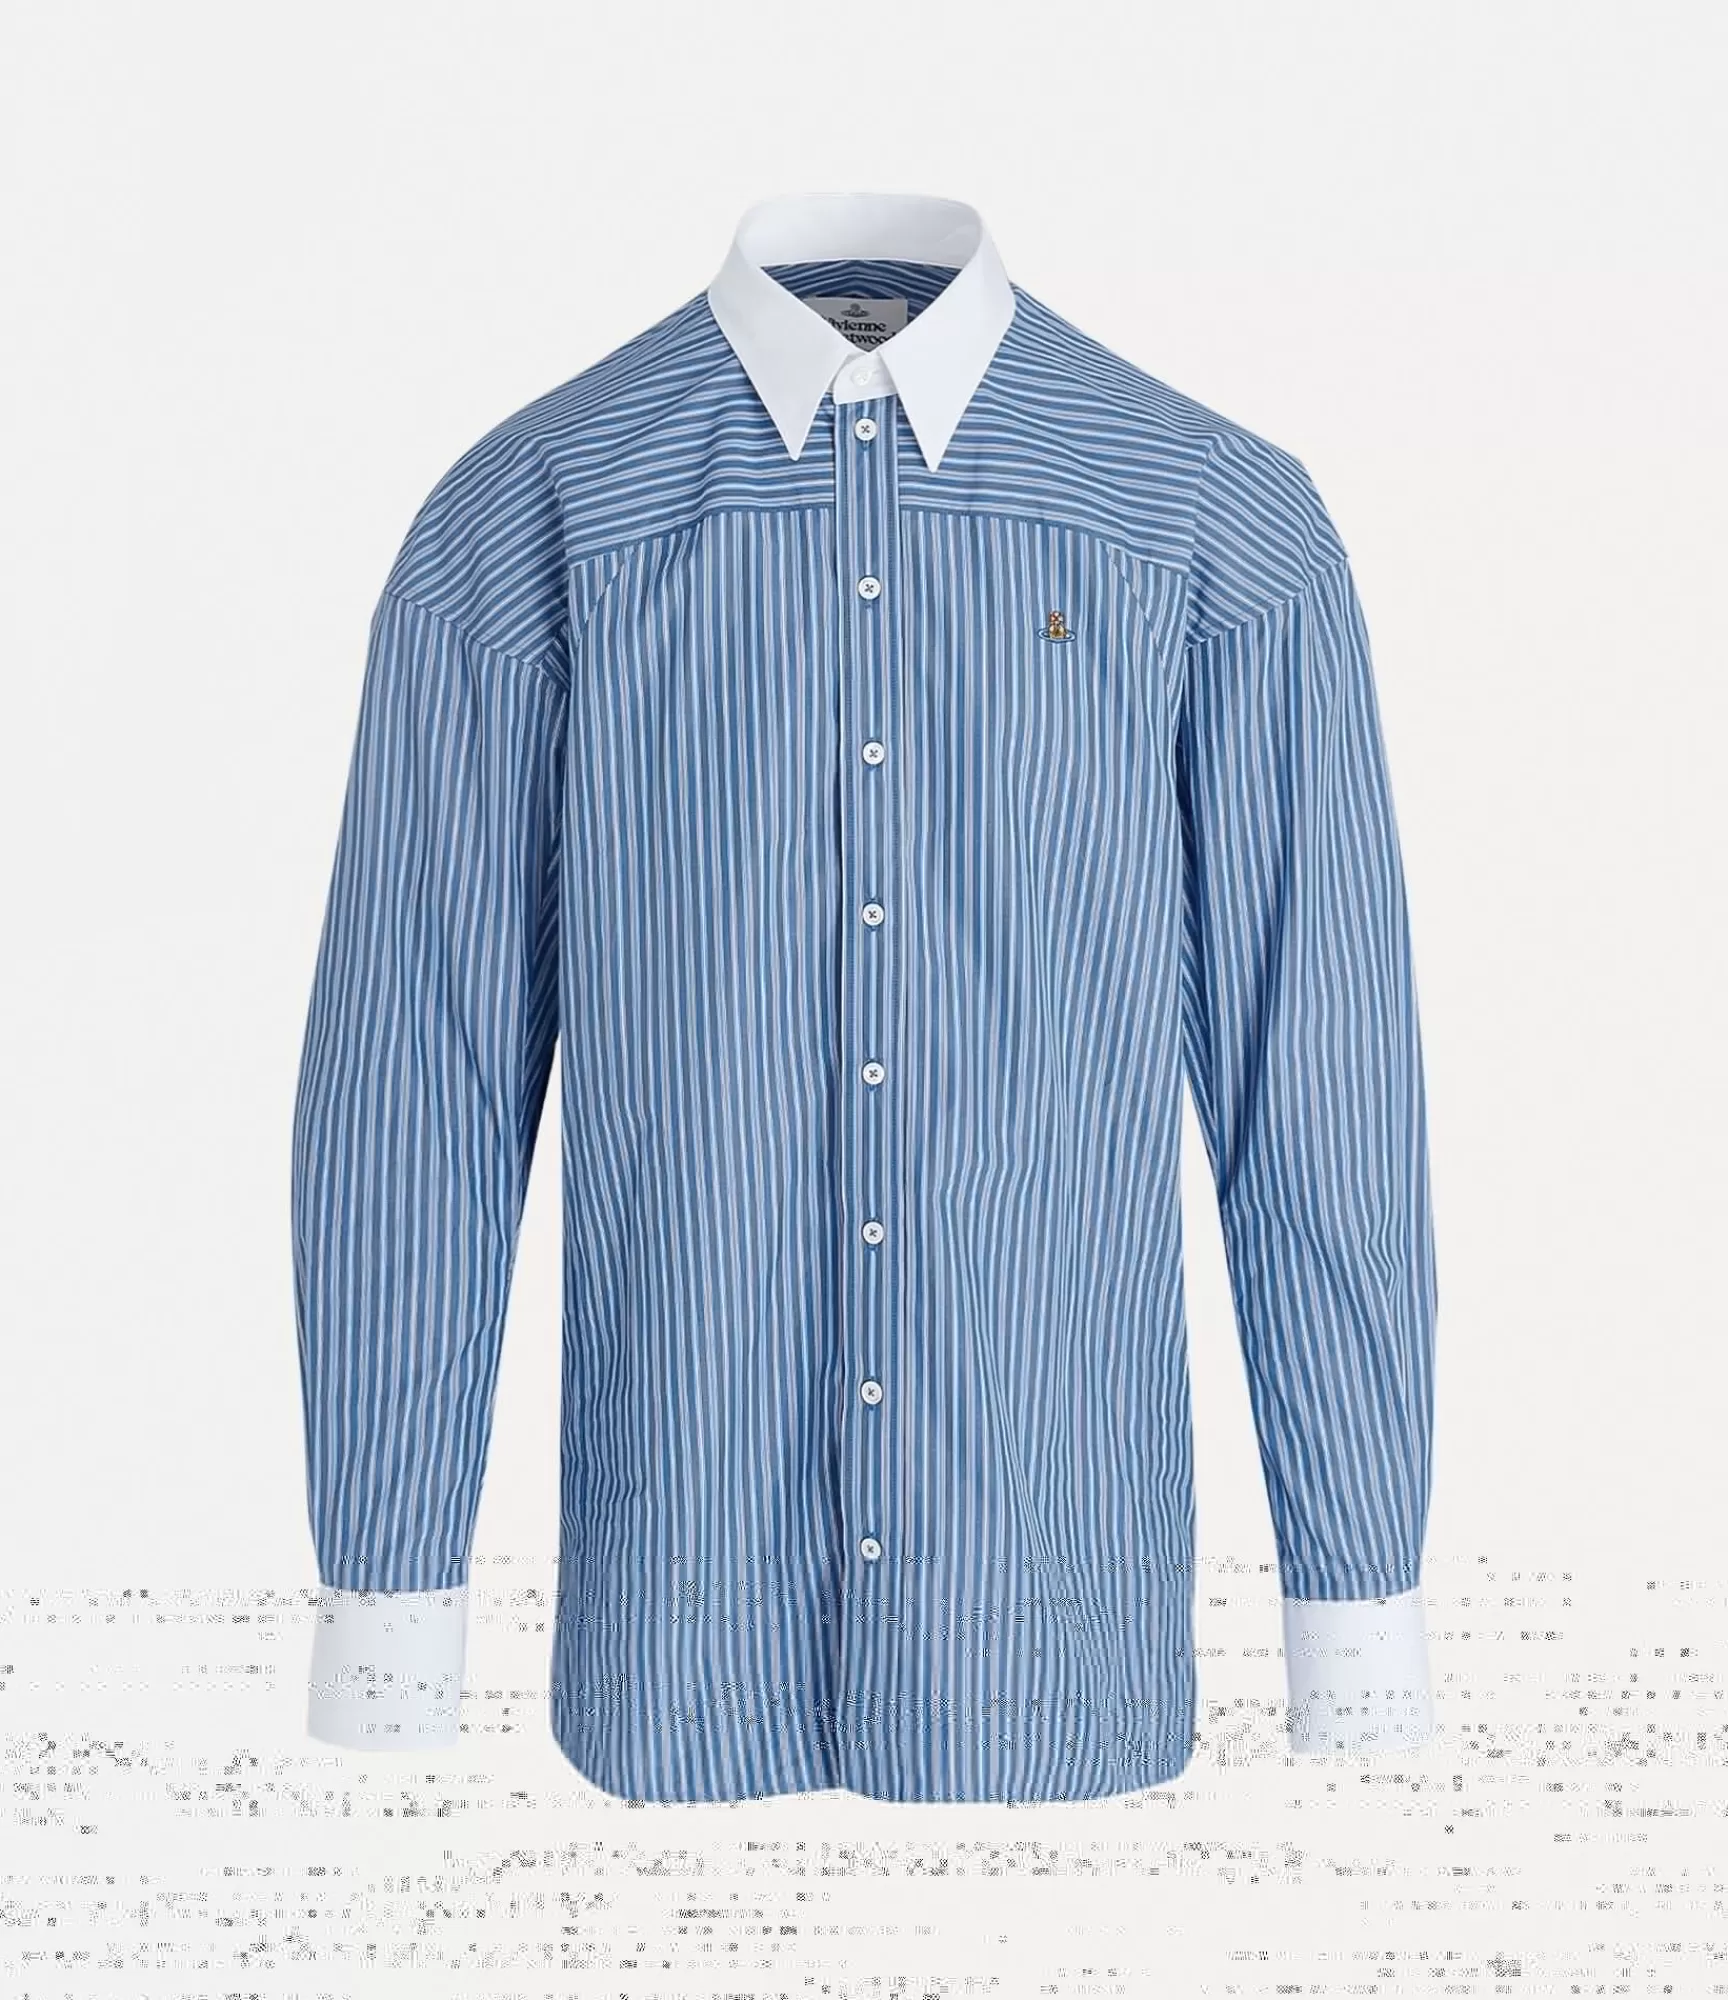 Vivienne Westwood Shirts | Tops and Shirts*Football shirt Thin Stripes